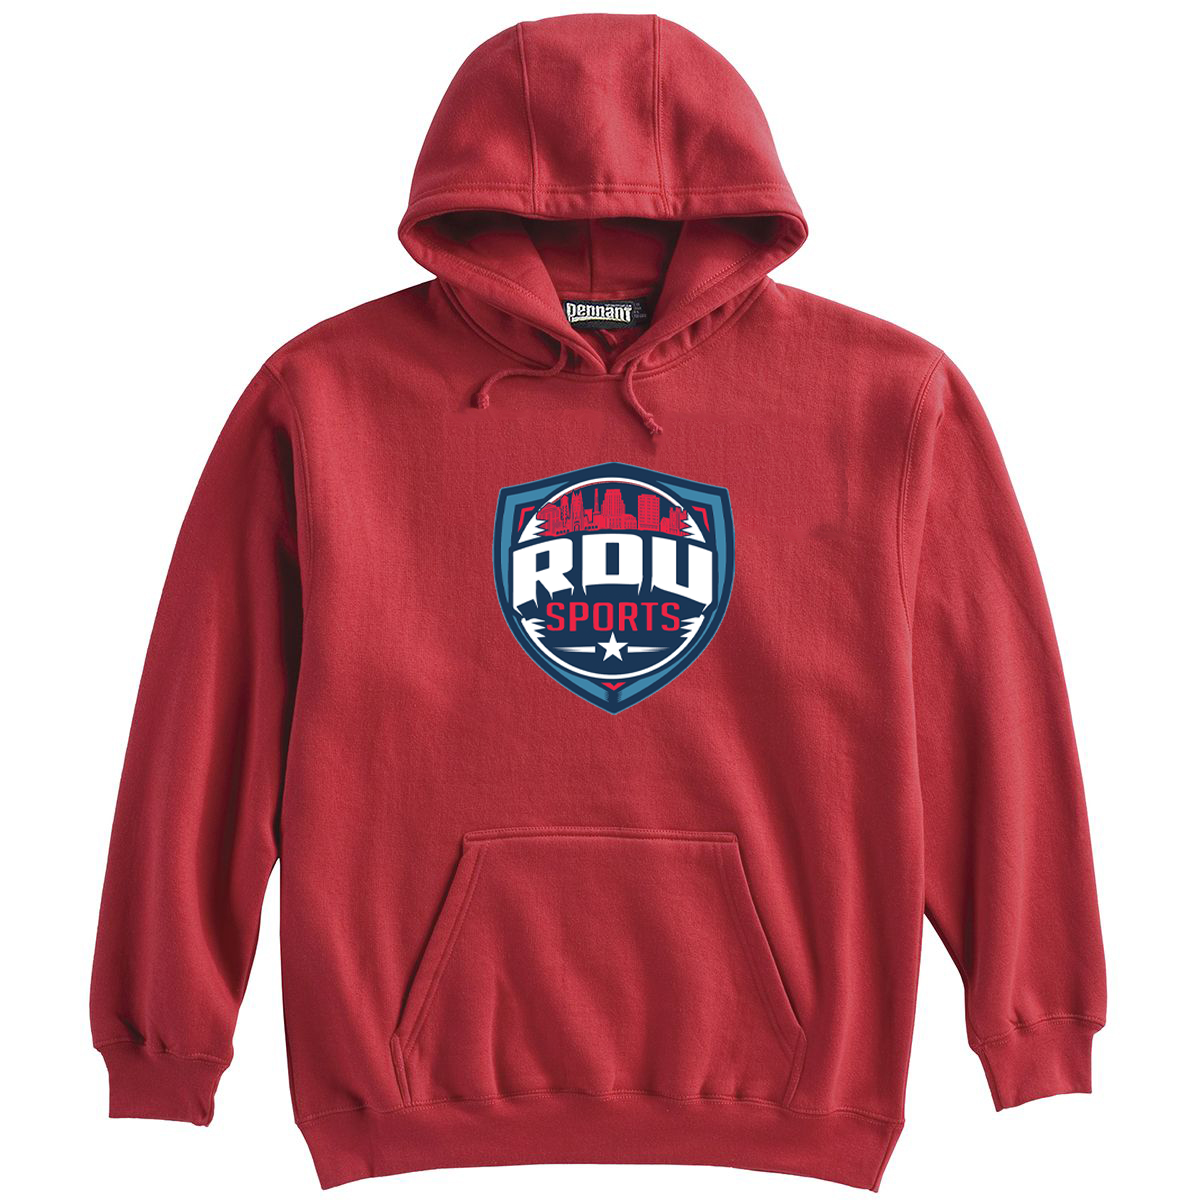 RDU Sports Sweatshirt